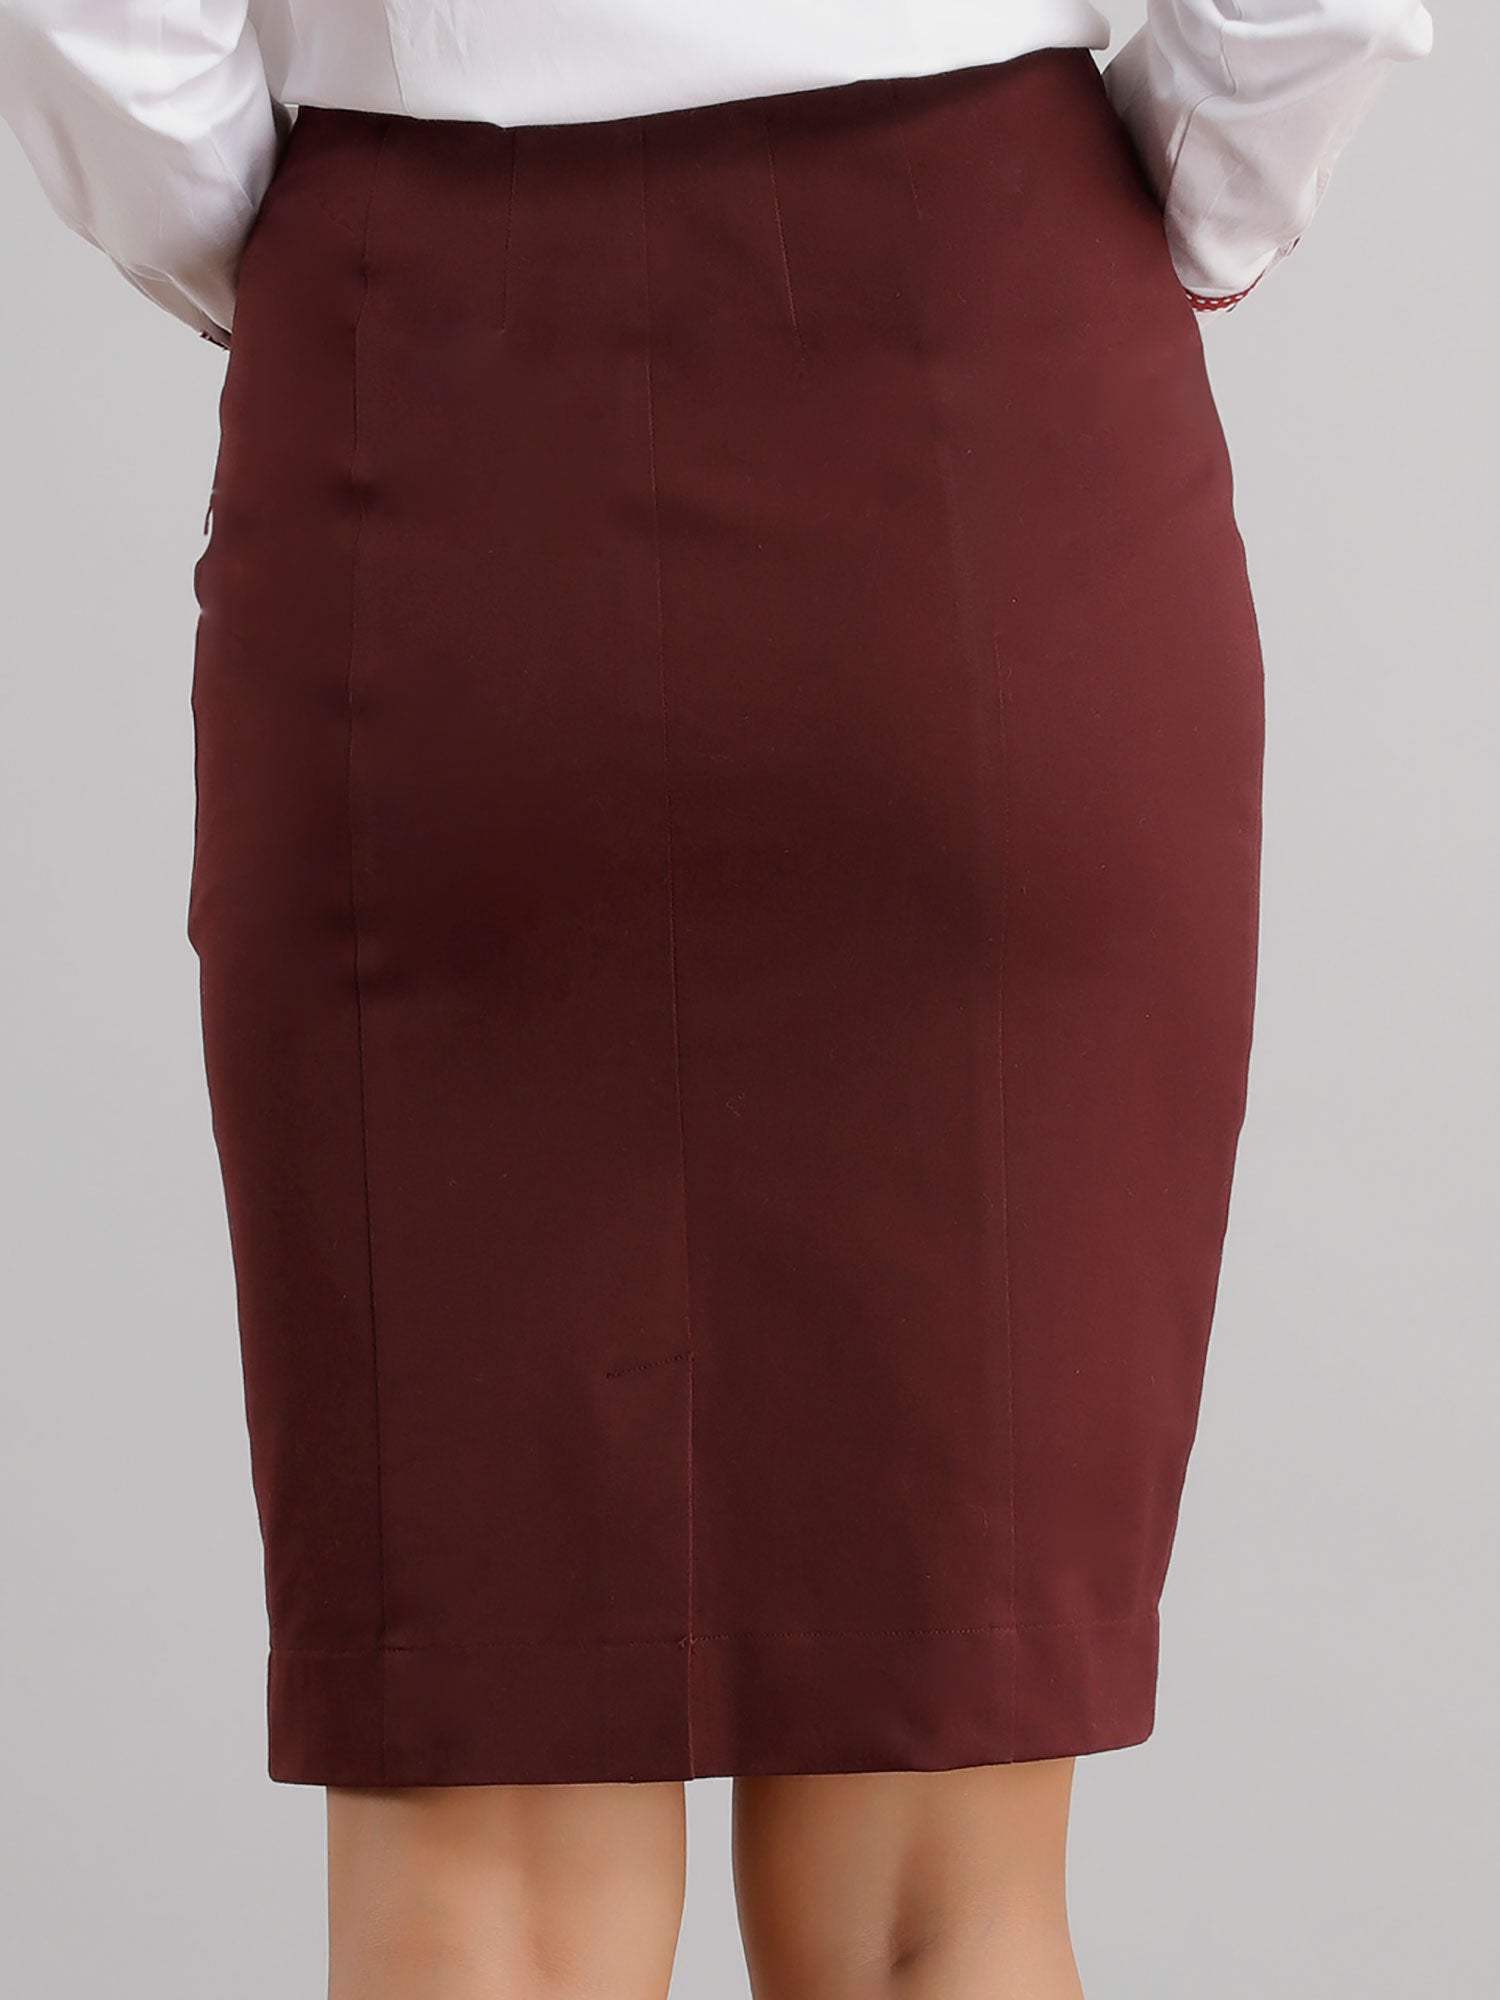 Classic Pencil Skirt - Maroon| Formal Skirts